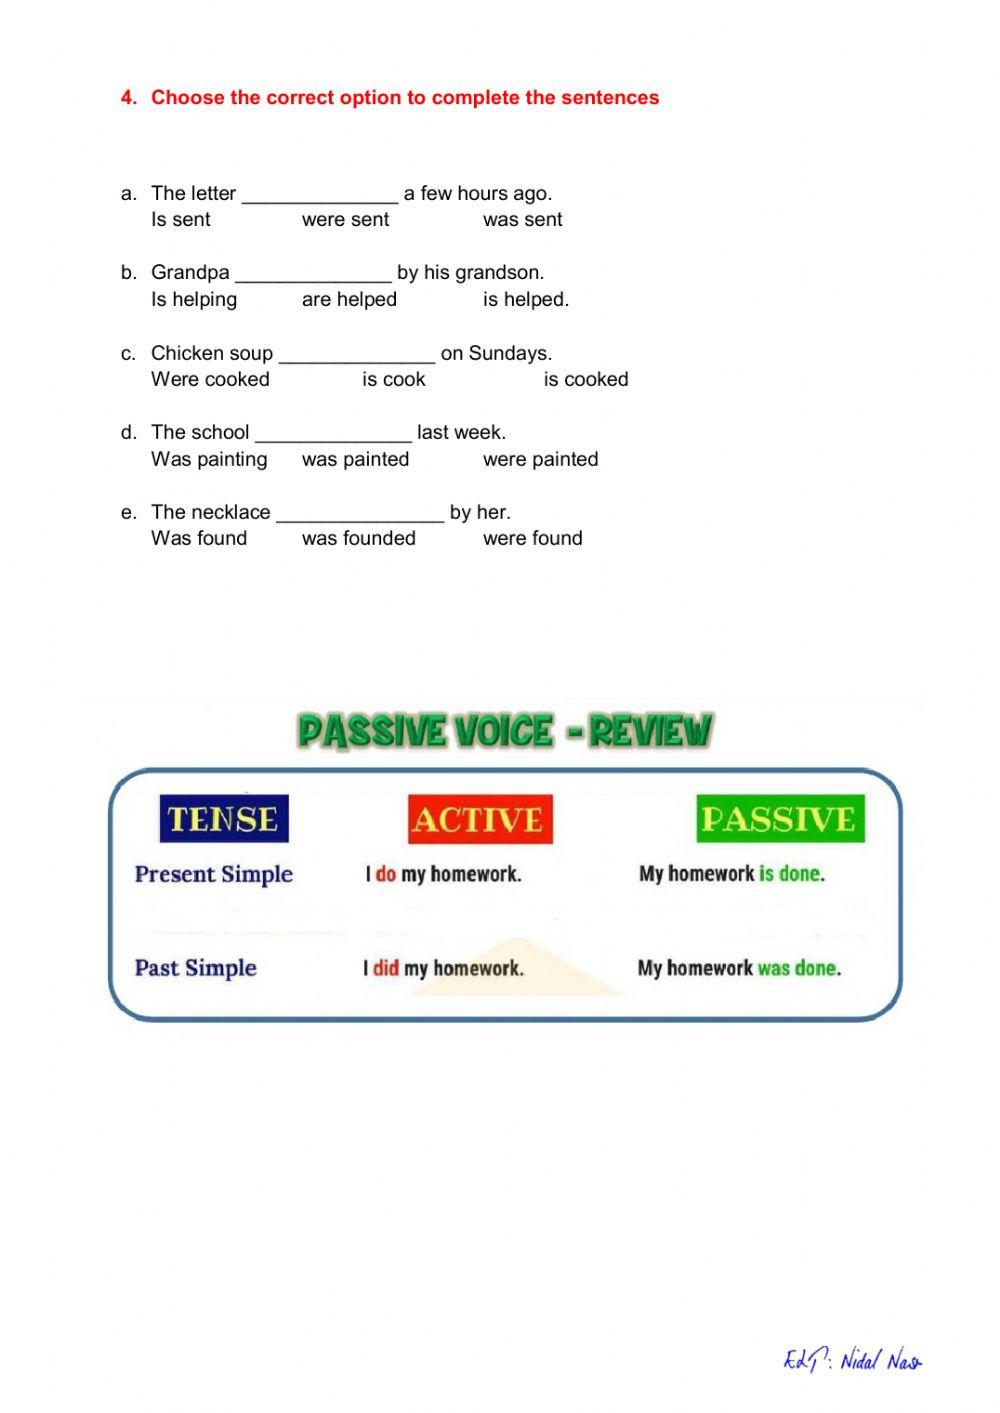 Passive Voice - G9